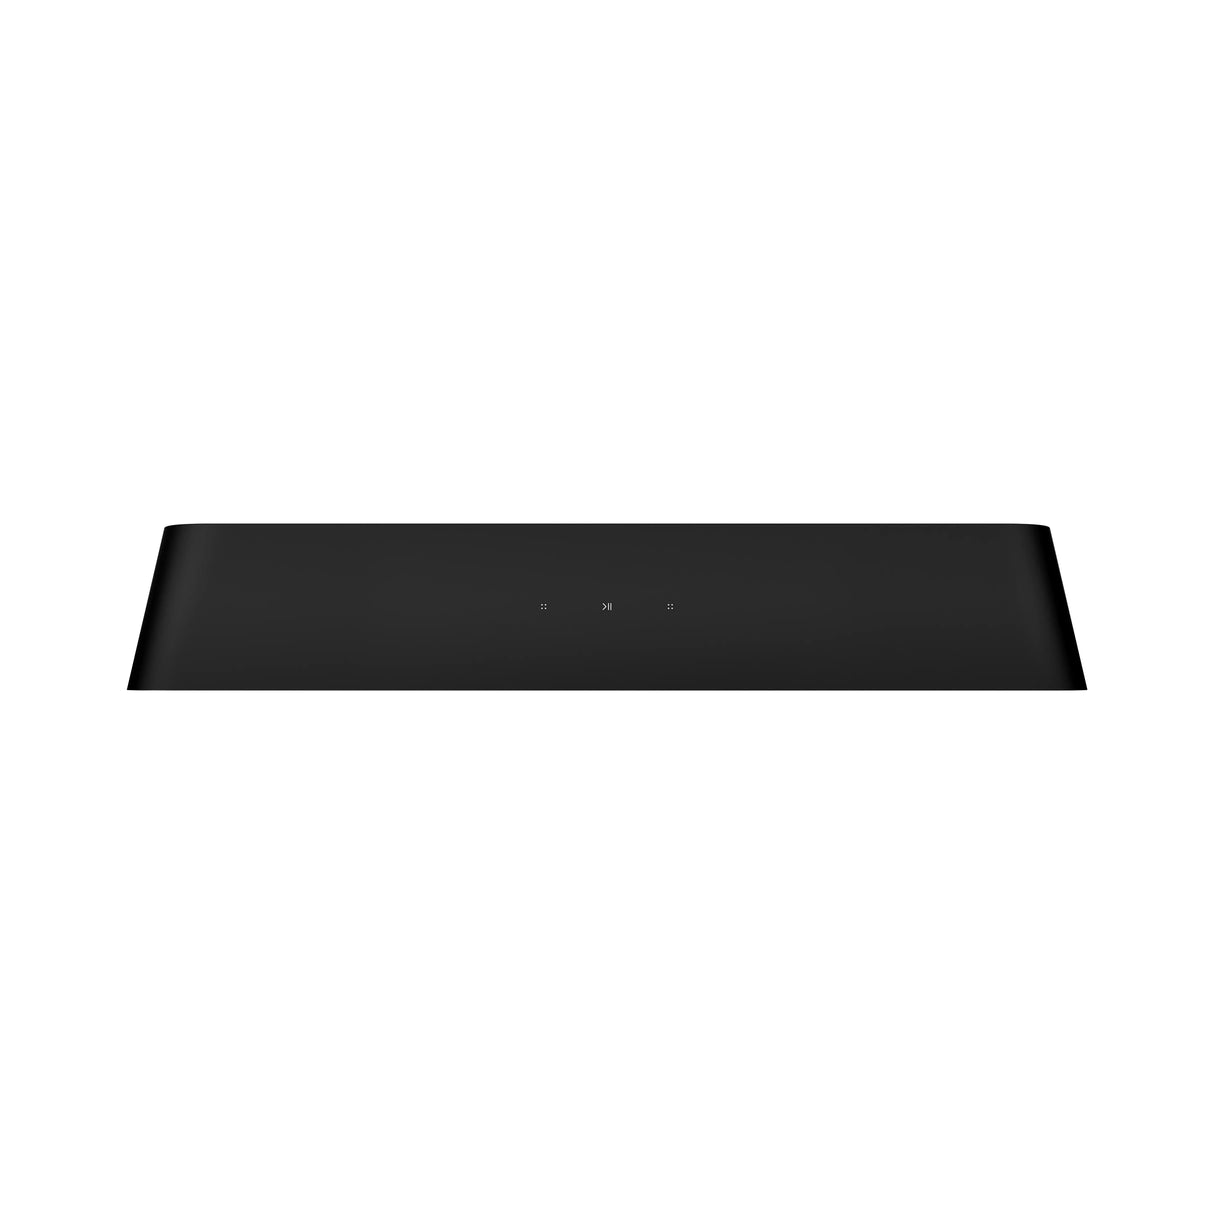 Sonos Ray - Impressively Compact Soundbar (Black)